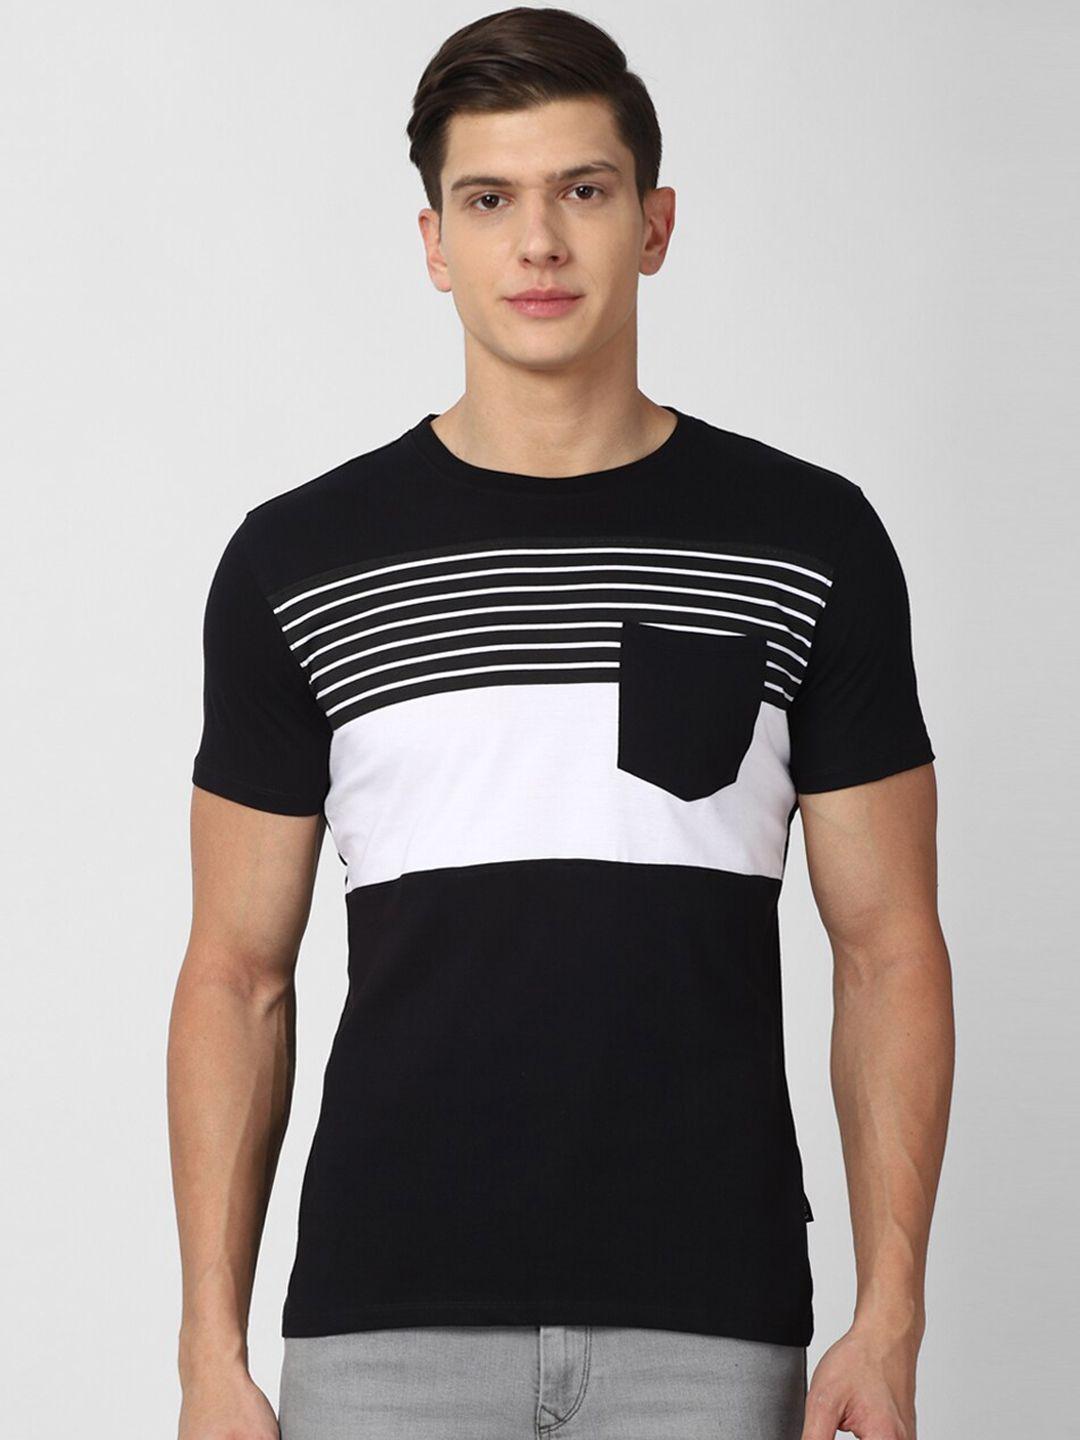 v dot men black & white striped slim fit pure cotton t-shirt